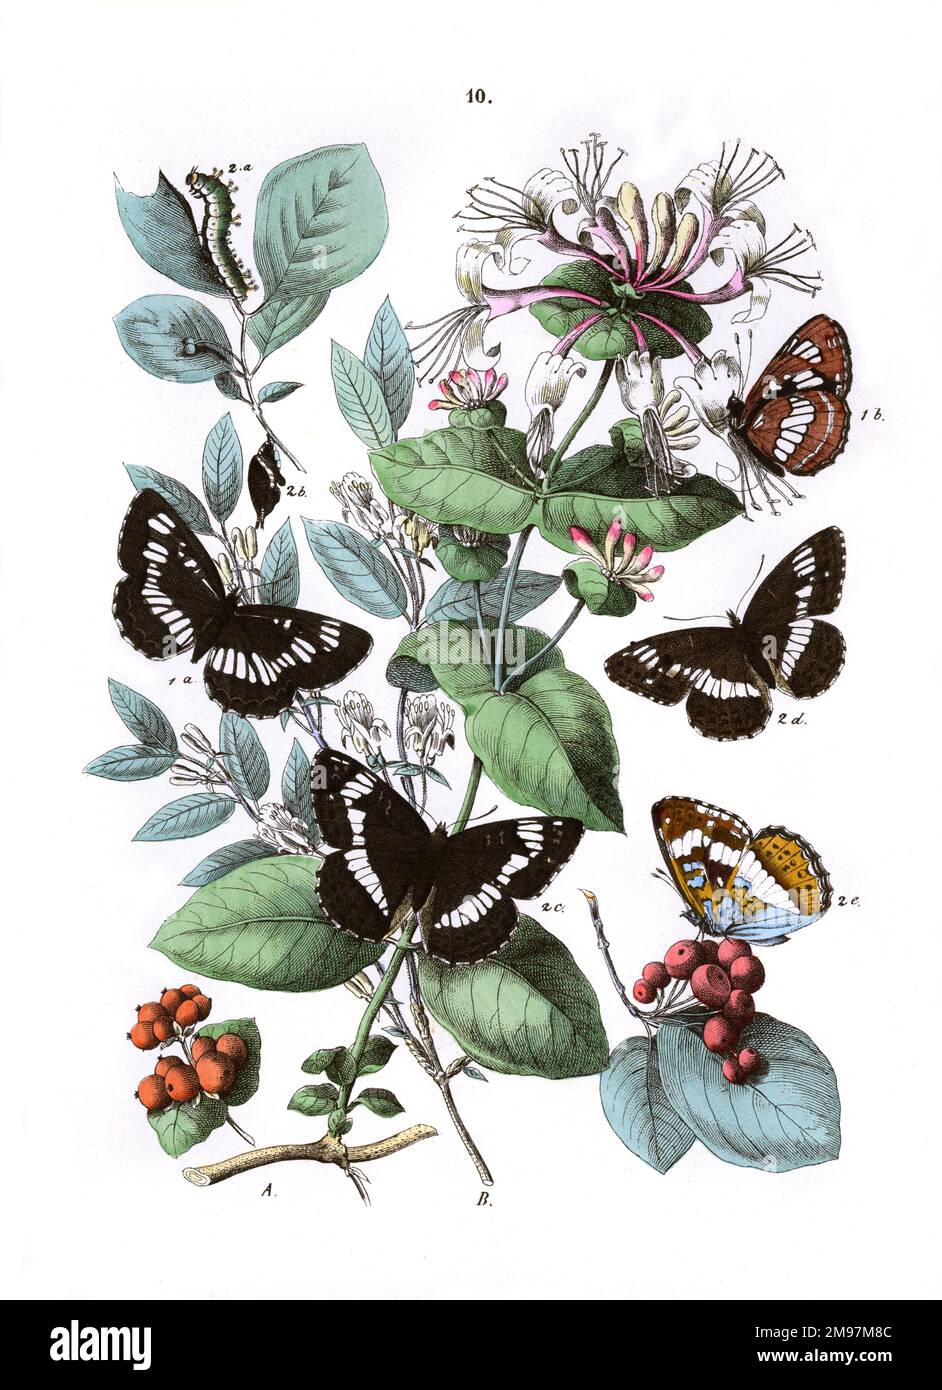 Illustration, Nymphalidae -- Neptis Lucilla, Limenitis Sibylla.  The plants are Perfoliate Honeysuckle (Lonicera Caprifolium) and Common Honeysuckle (Lonicera Xylosteum). Stock Photo